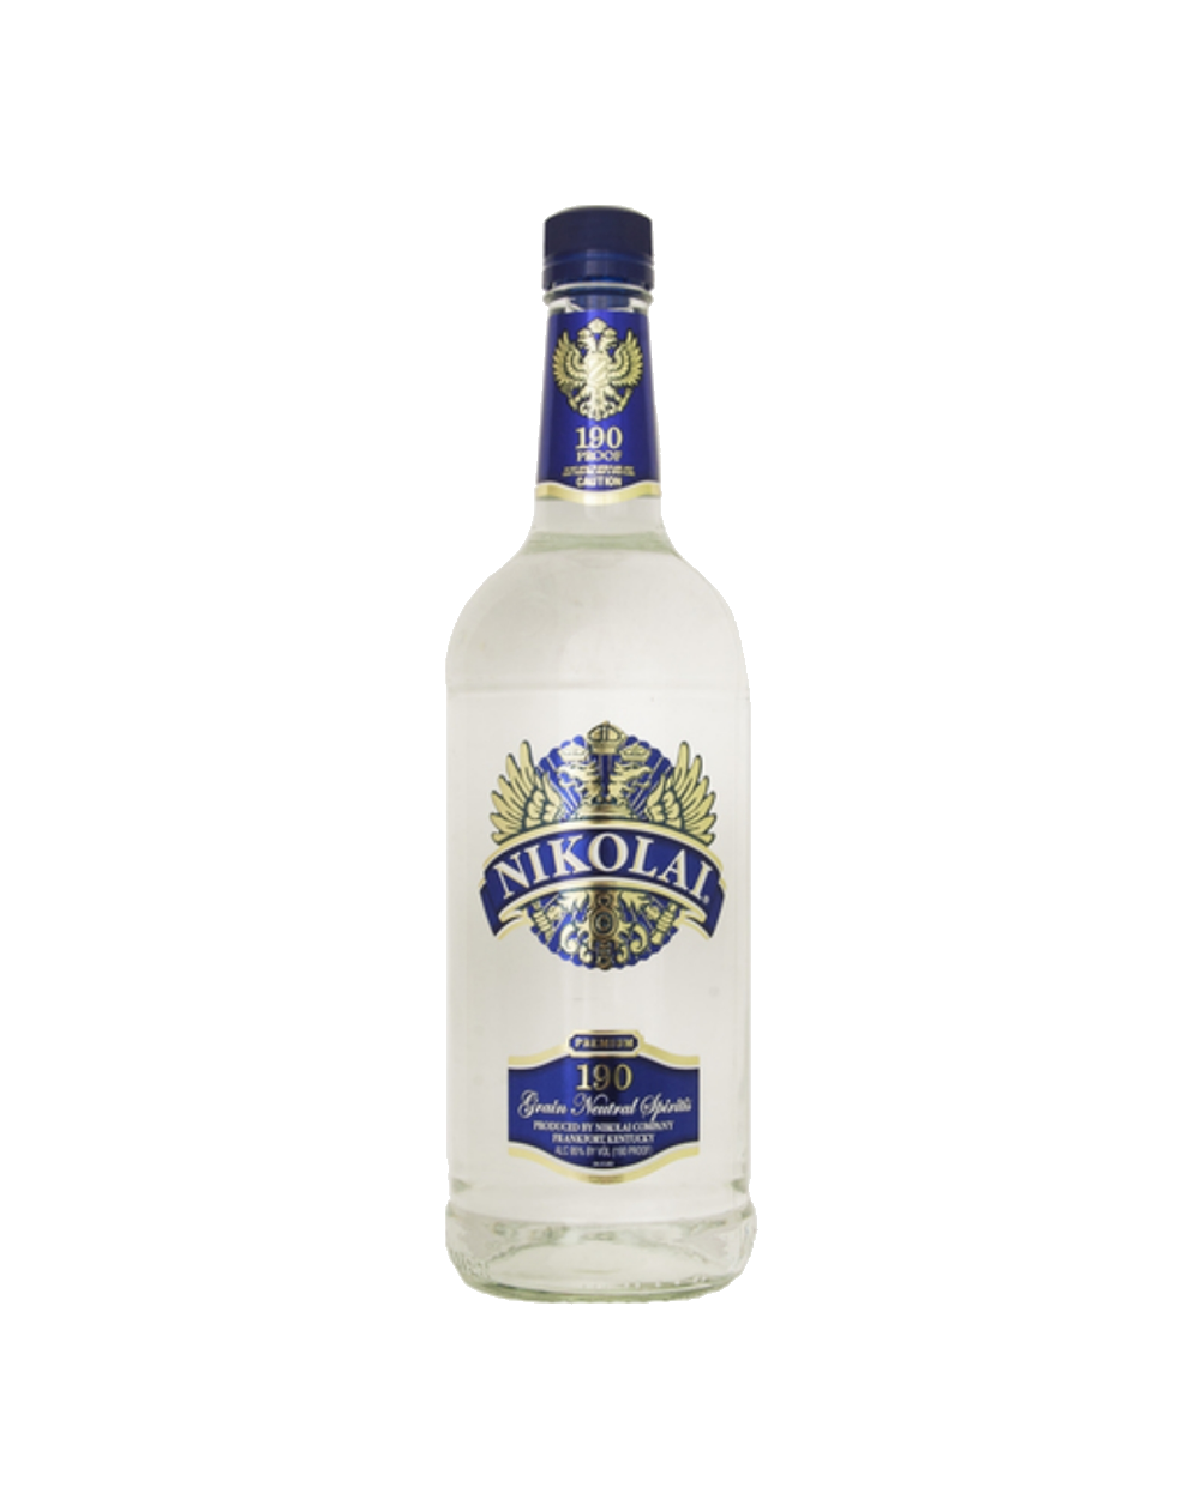 Nikolai 190 Grain Alcohol 1L